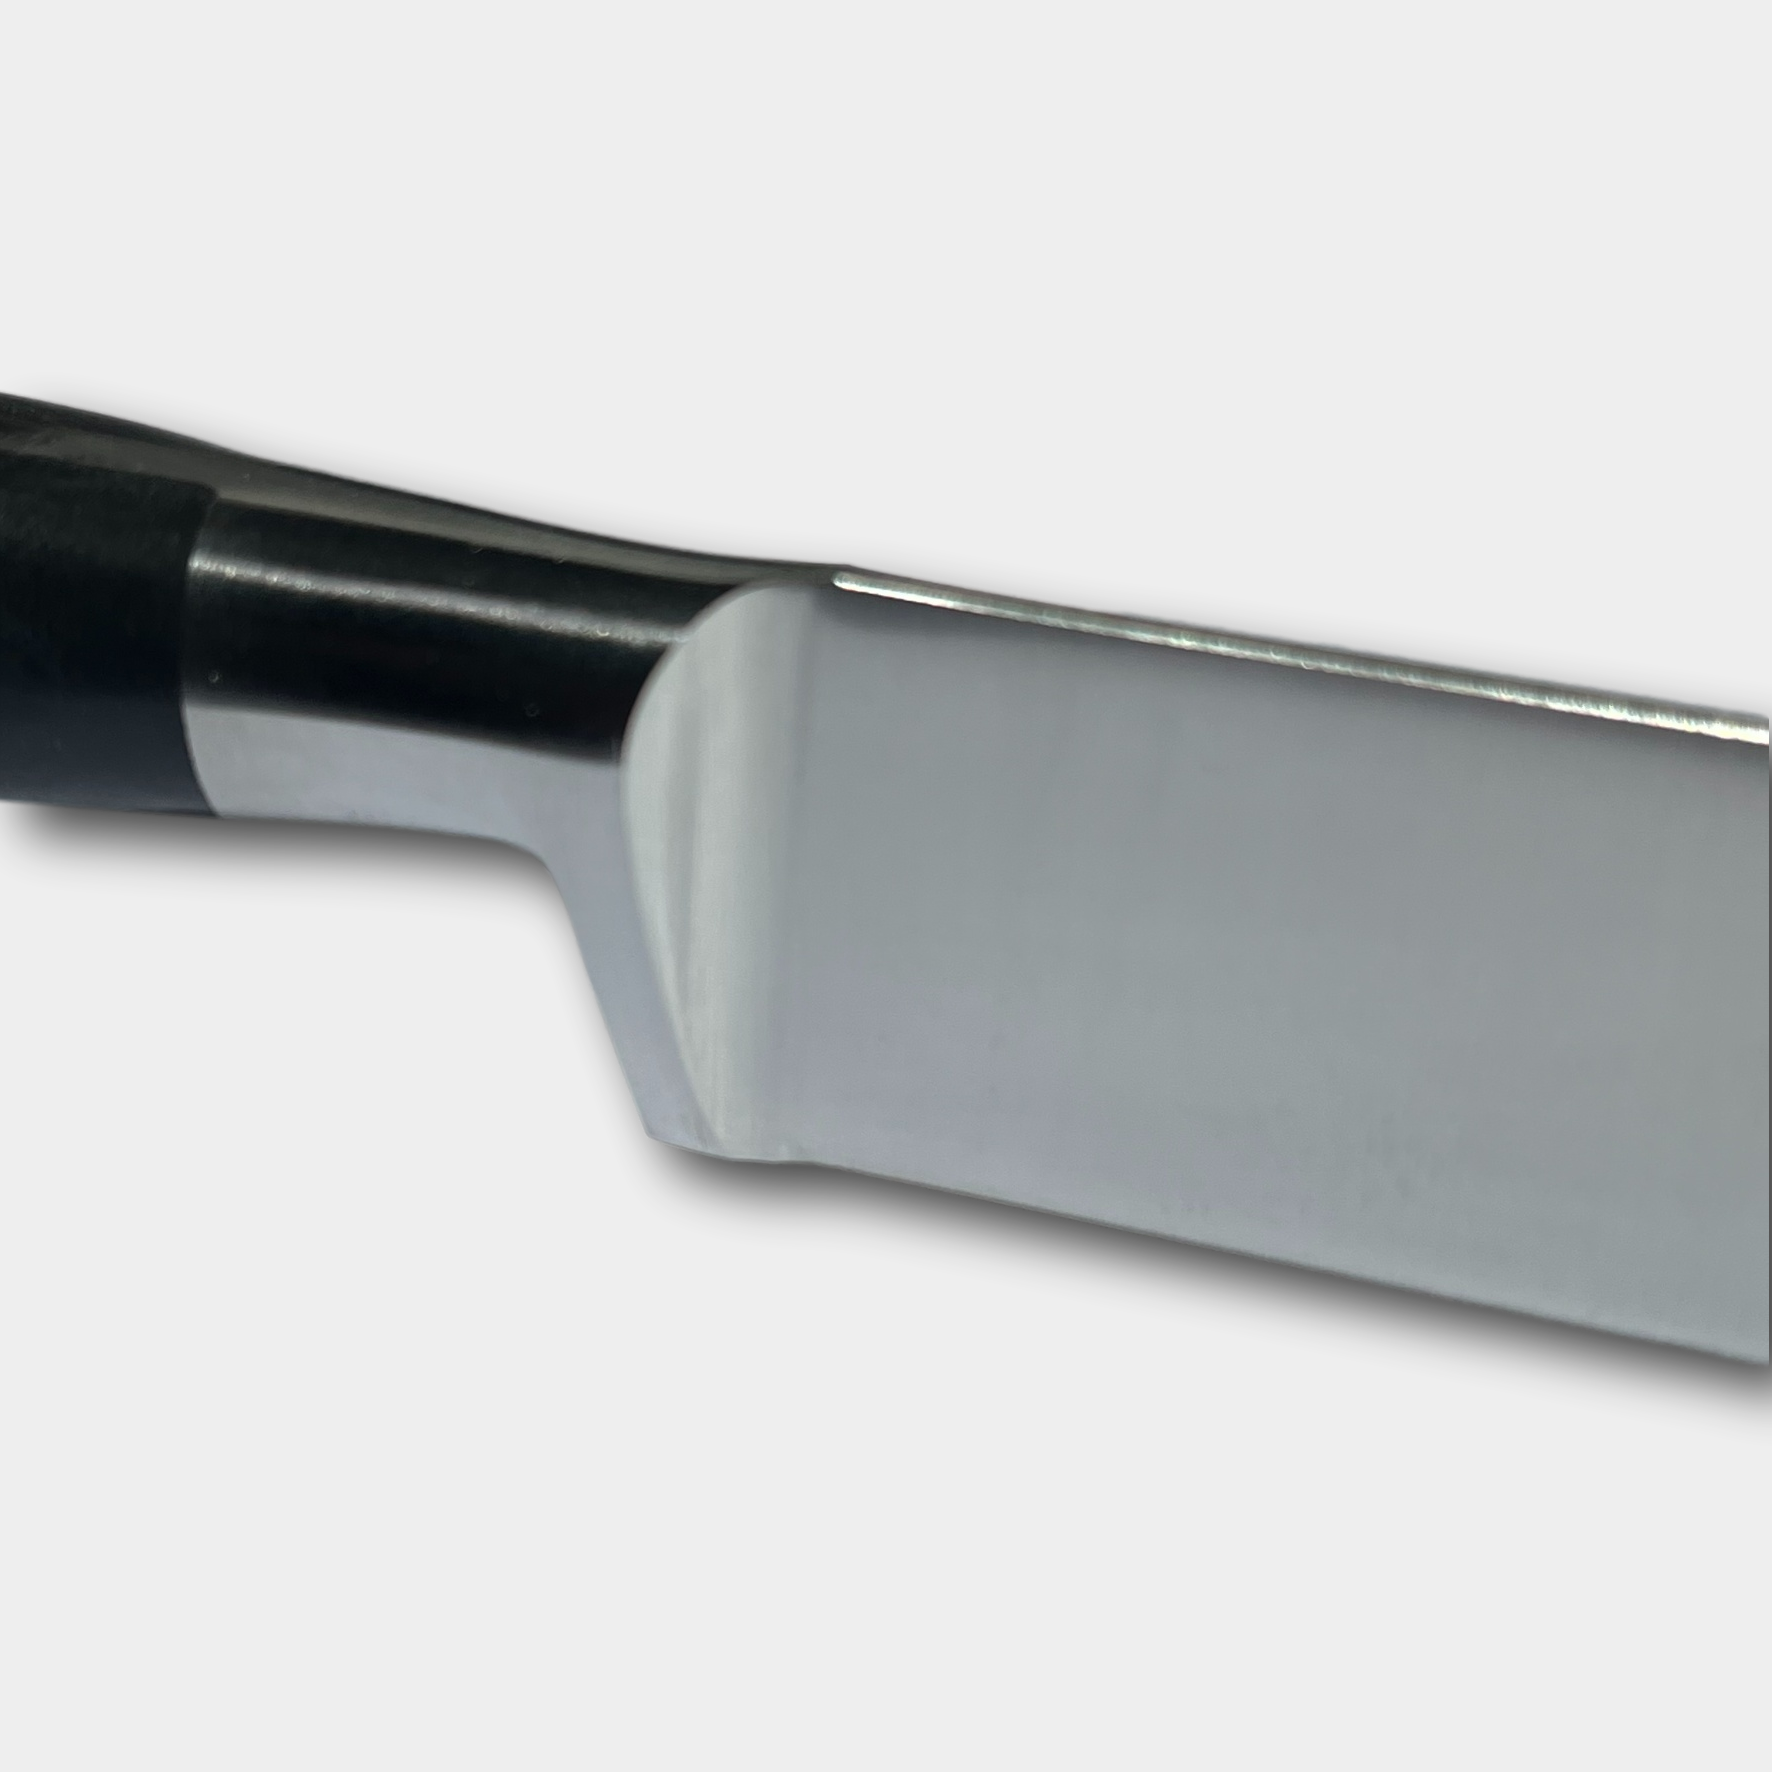 Lion Sabtier Ideal Steel 10cm Paring Knife